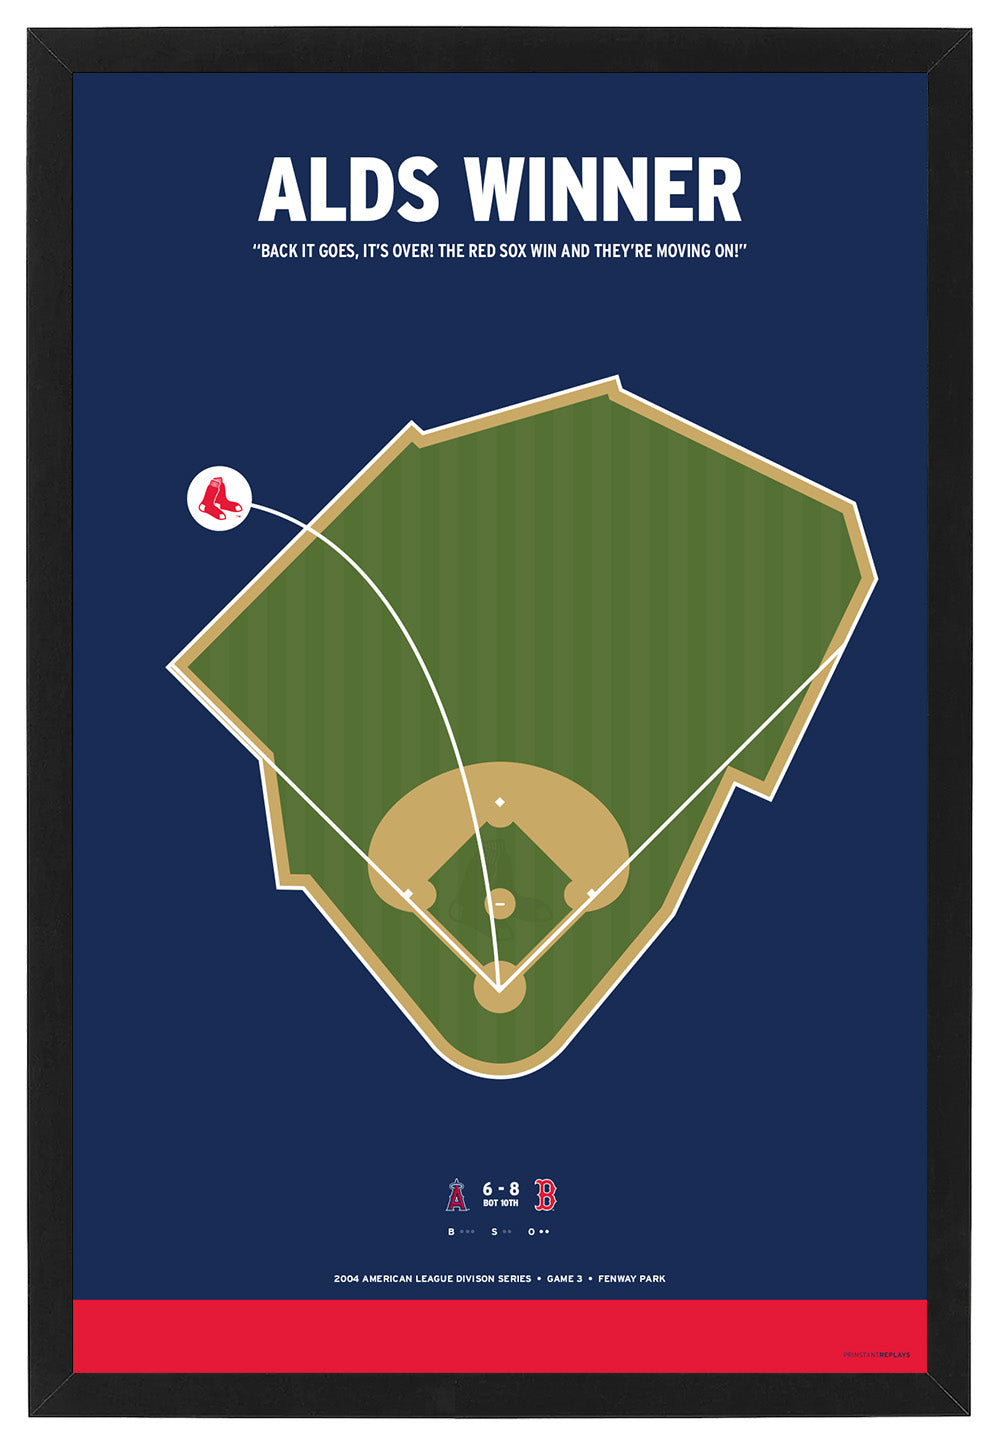 Red Sox Ortiz ALDS Winner Print